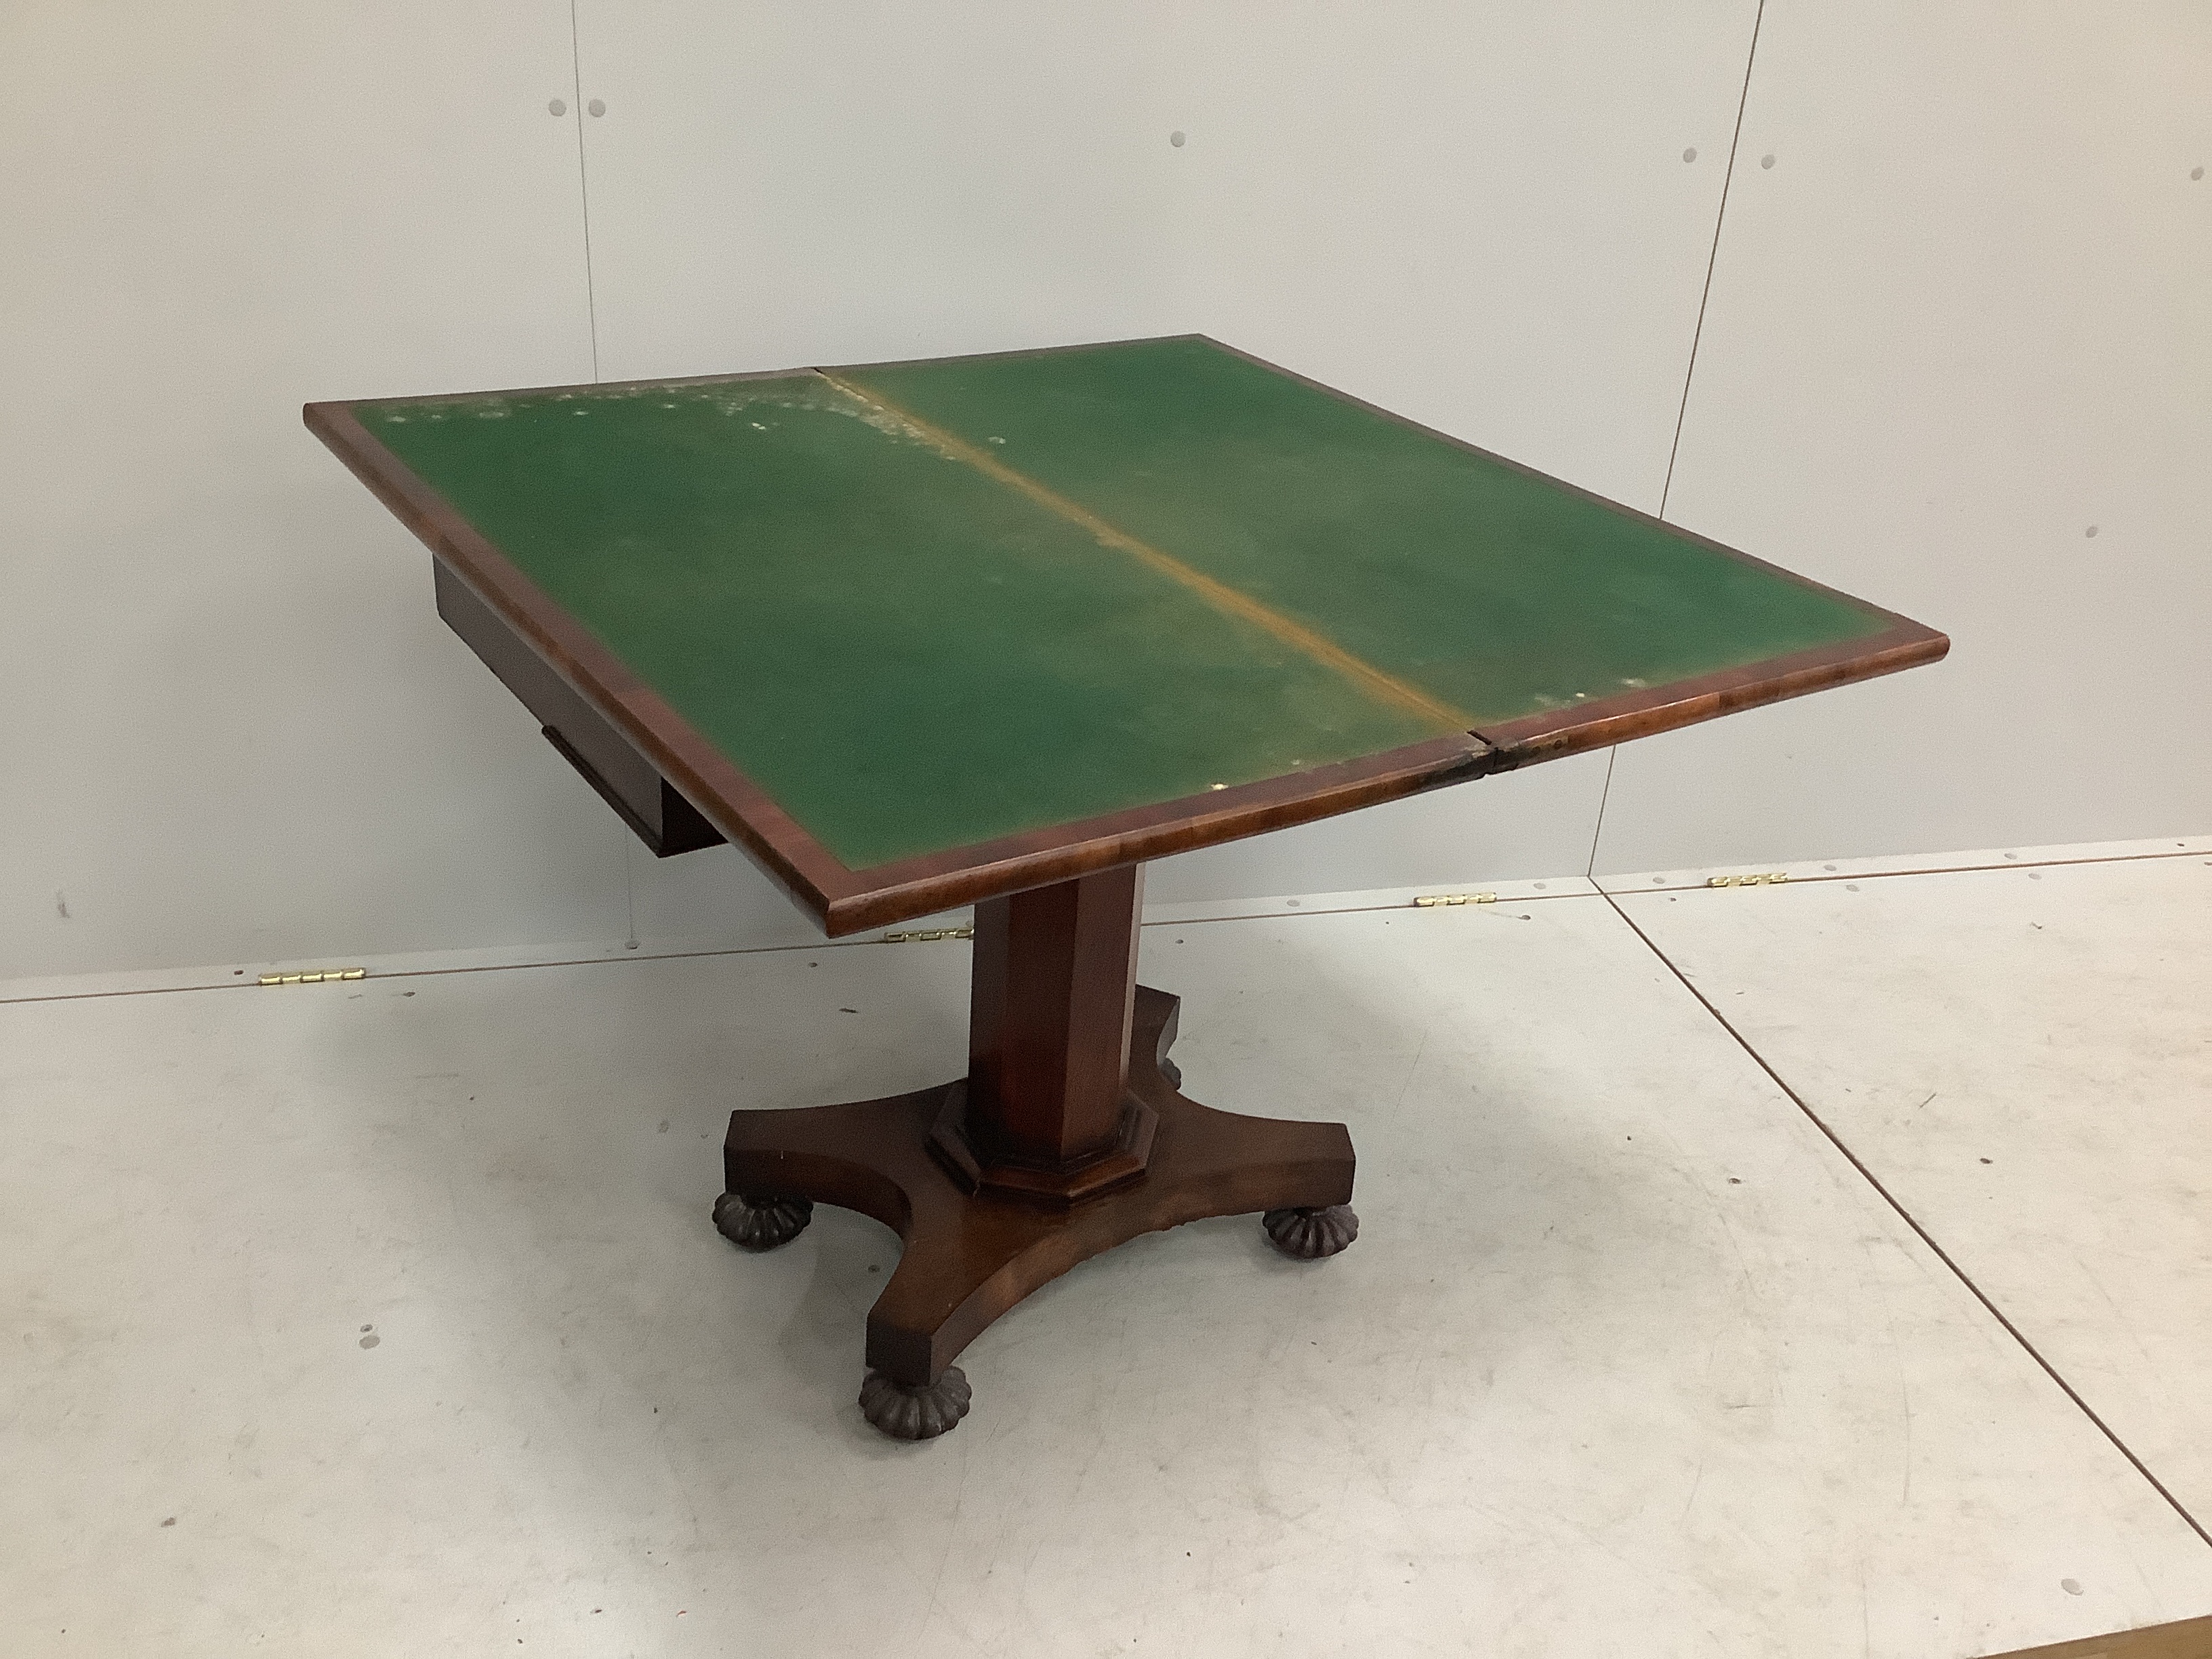 An early Victorian rectangular mahogany folding card table, width 92cm, depth 45cm, height 74cm